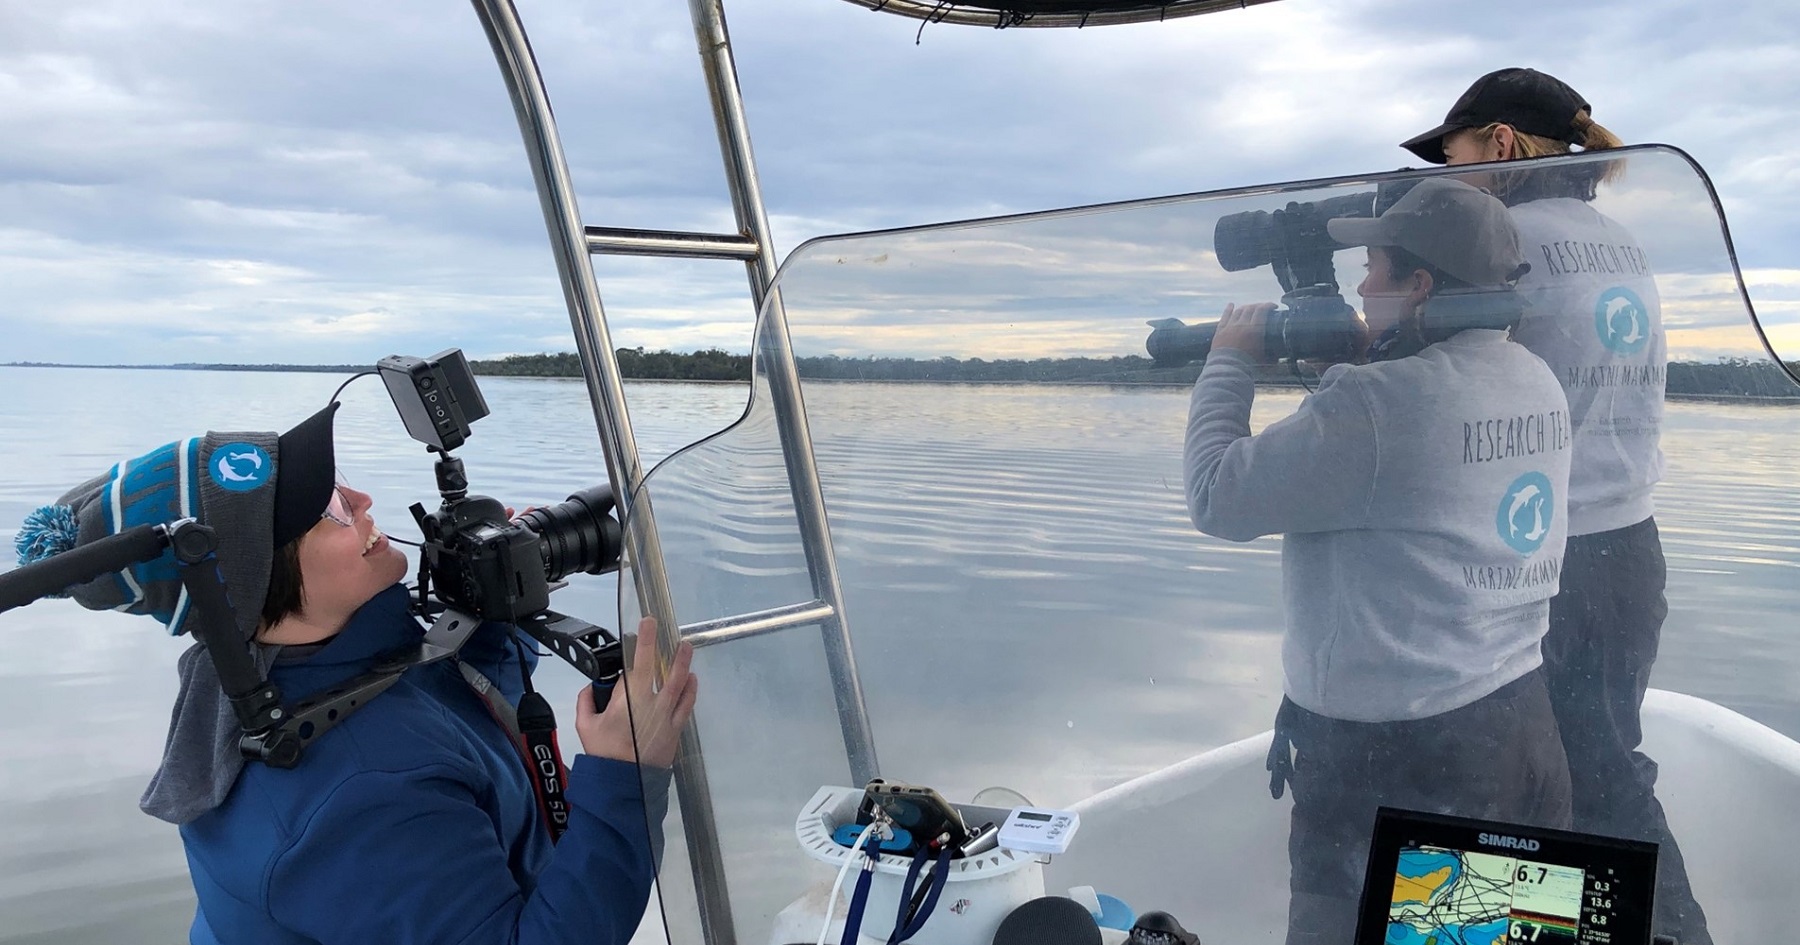 FNR alumna Olivia Andrus-Drennan films researchers on a boat at sea